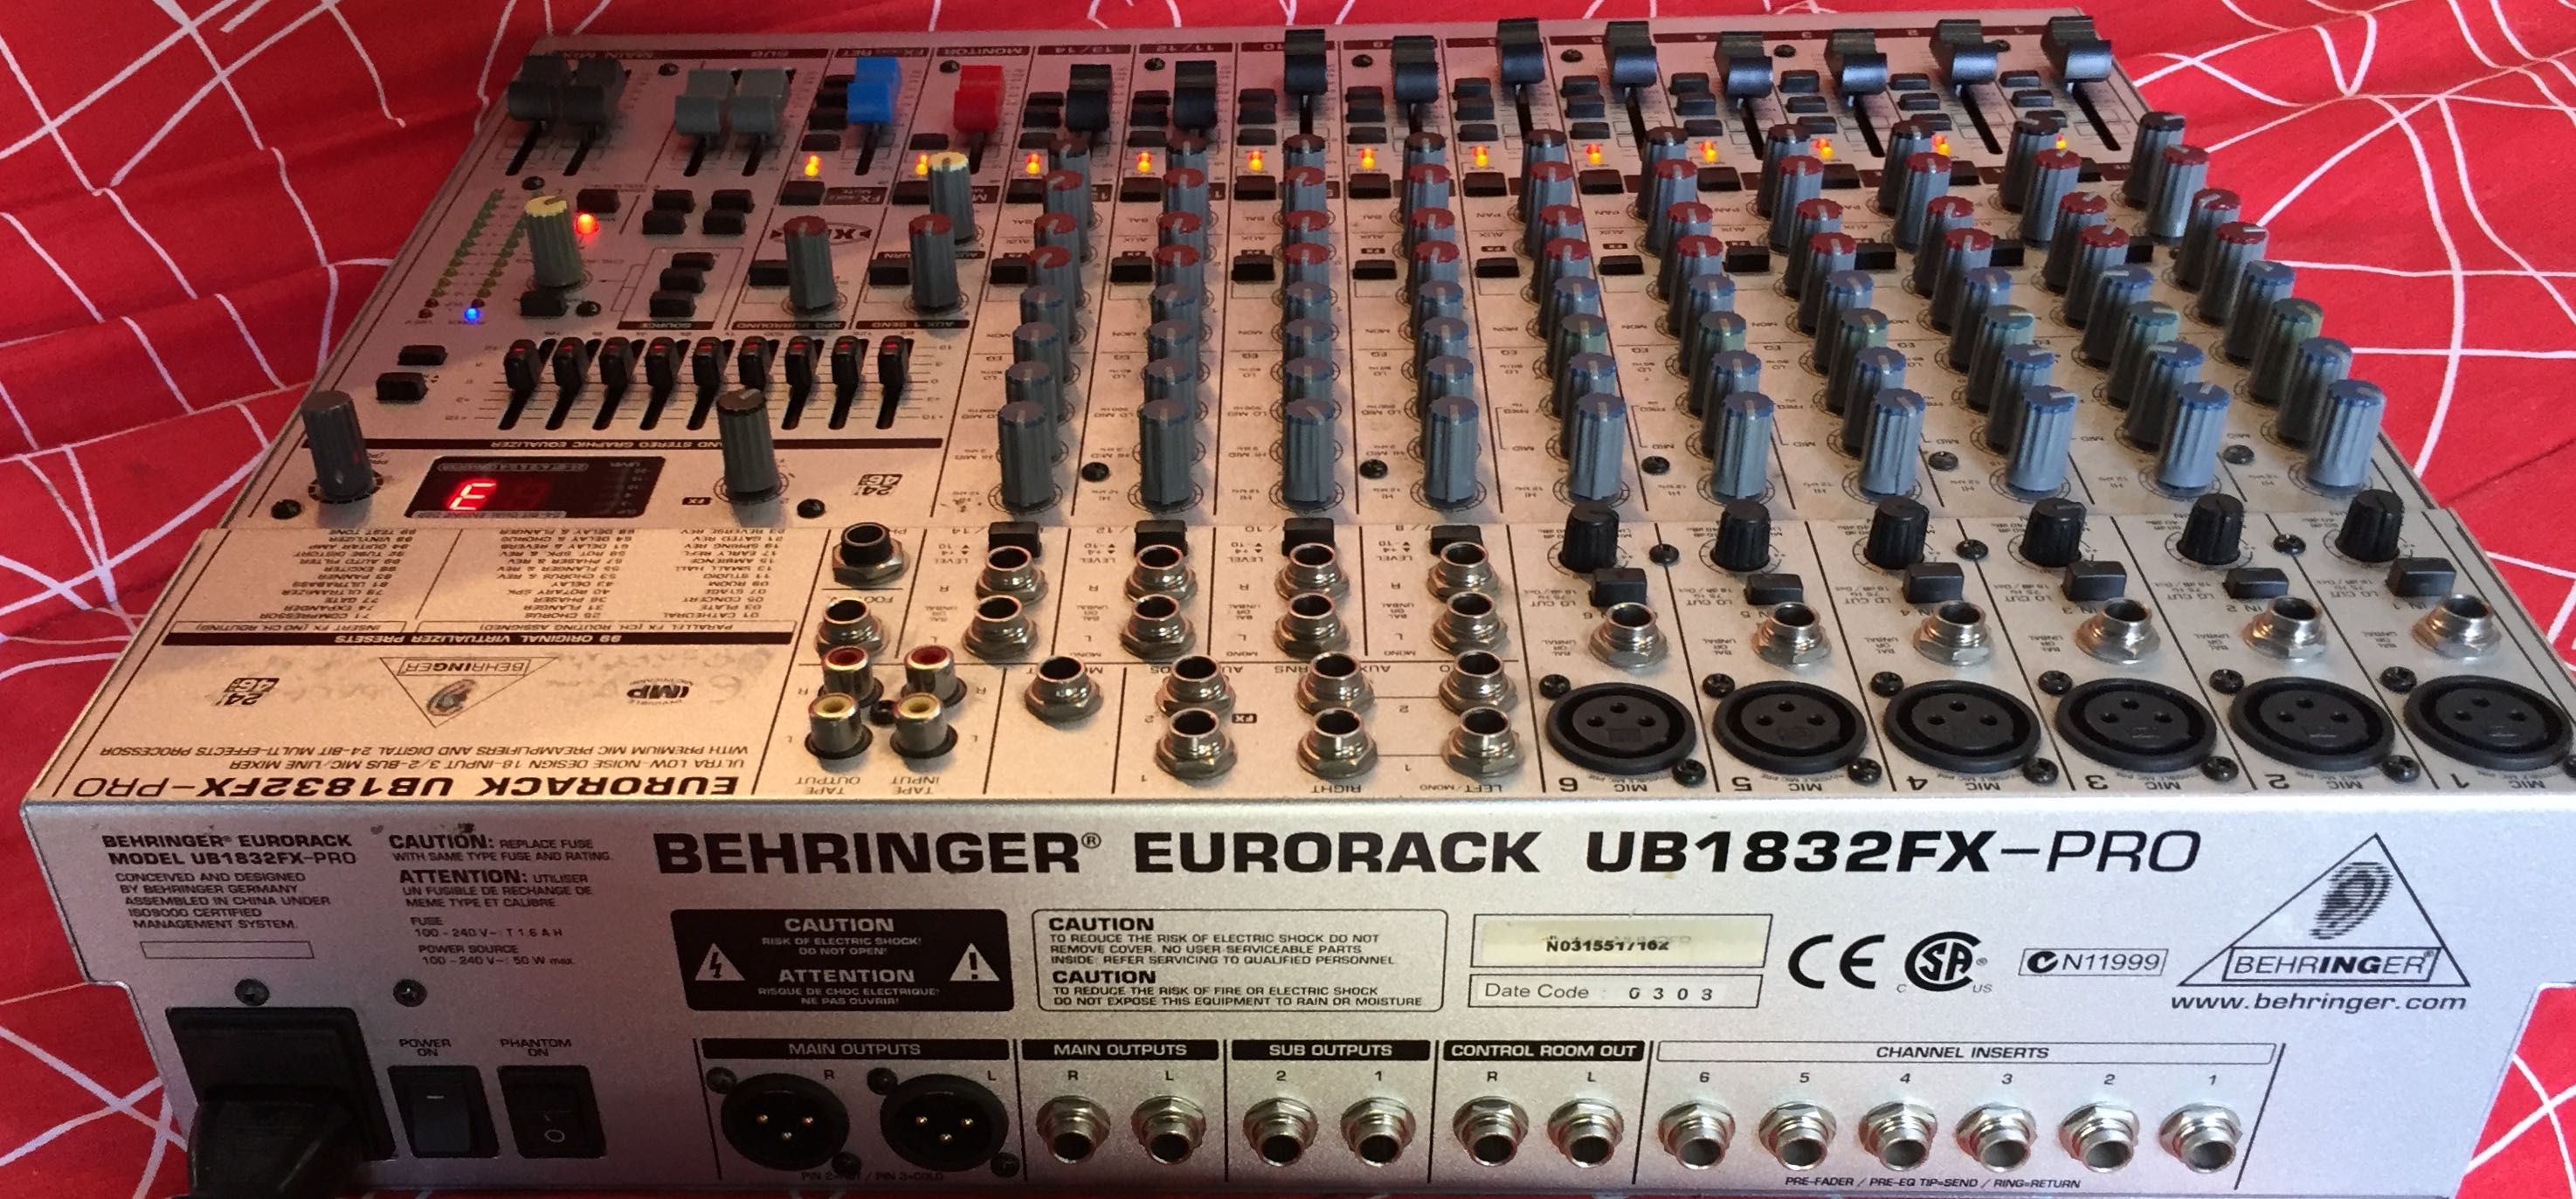 Eurorack UB1832FX-Pro - Behringer Eurorack UB1832FX-Pro - Audiofanzine